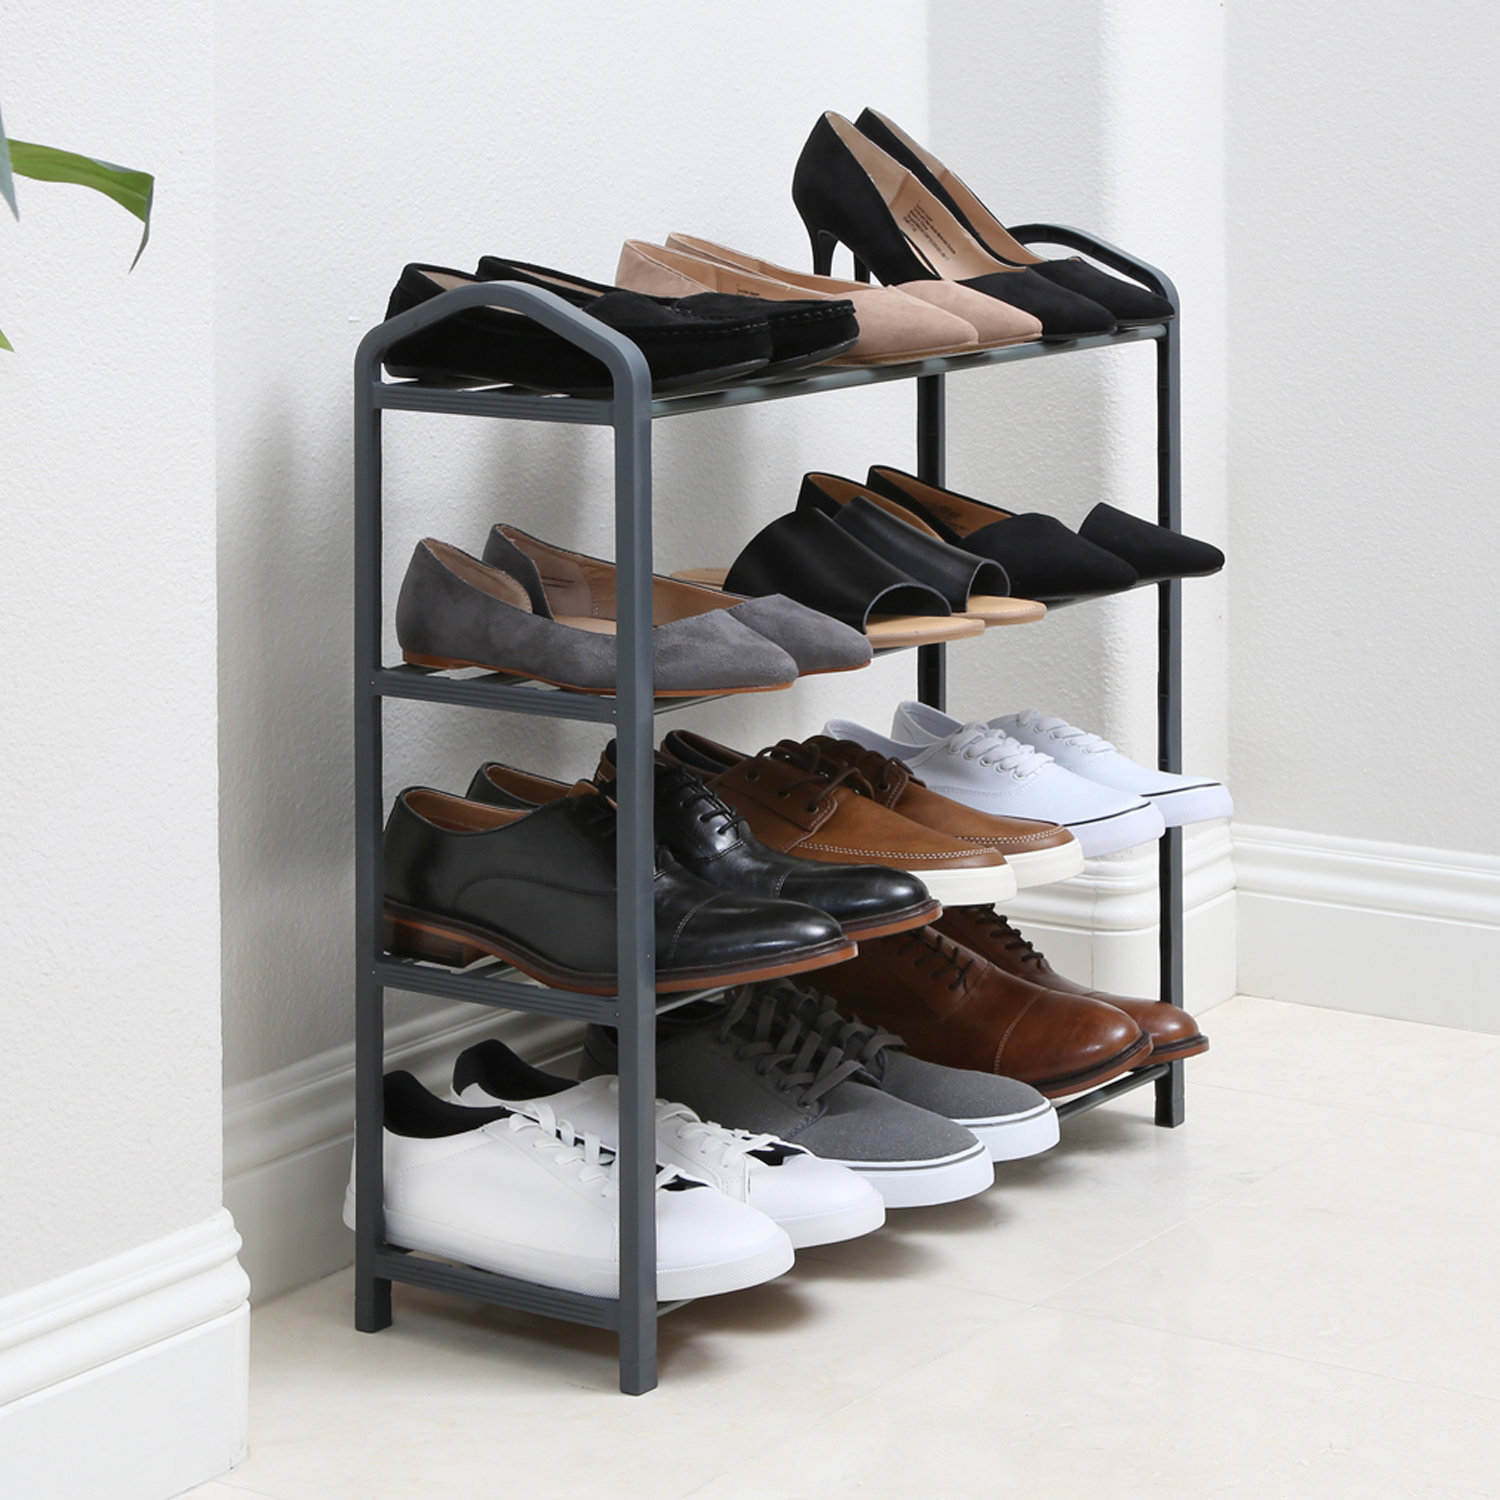 HOOBRO 10-Tier Shoe Rack, Large Capacity Shoe Organizer Shelf